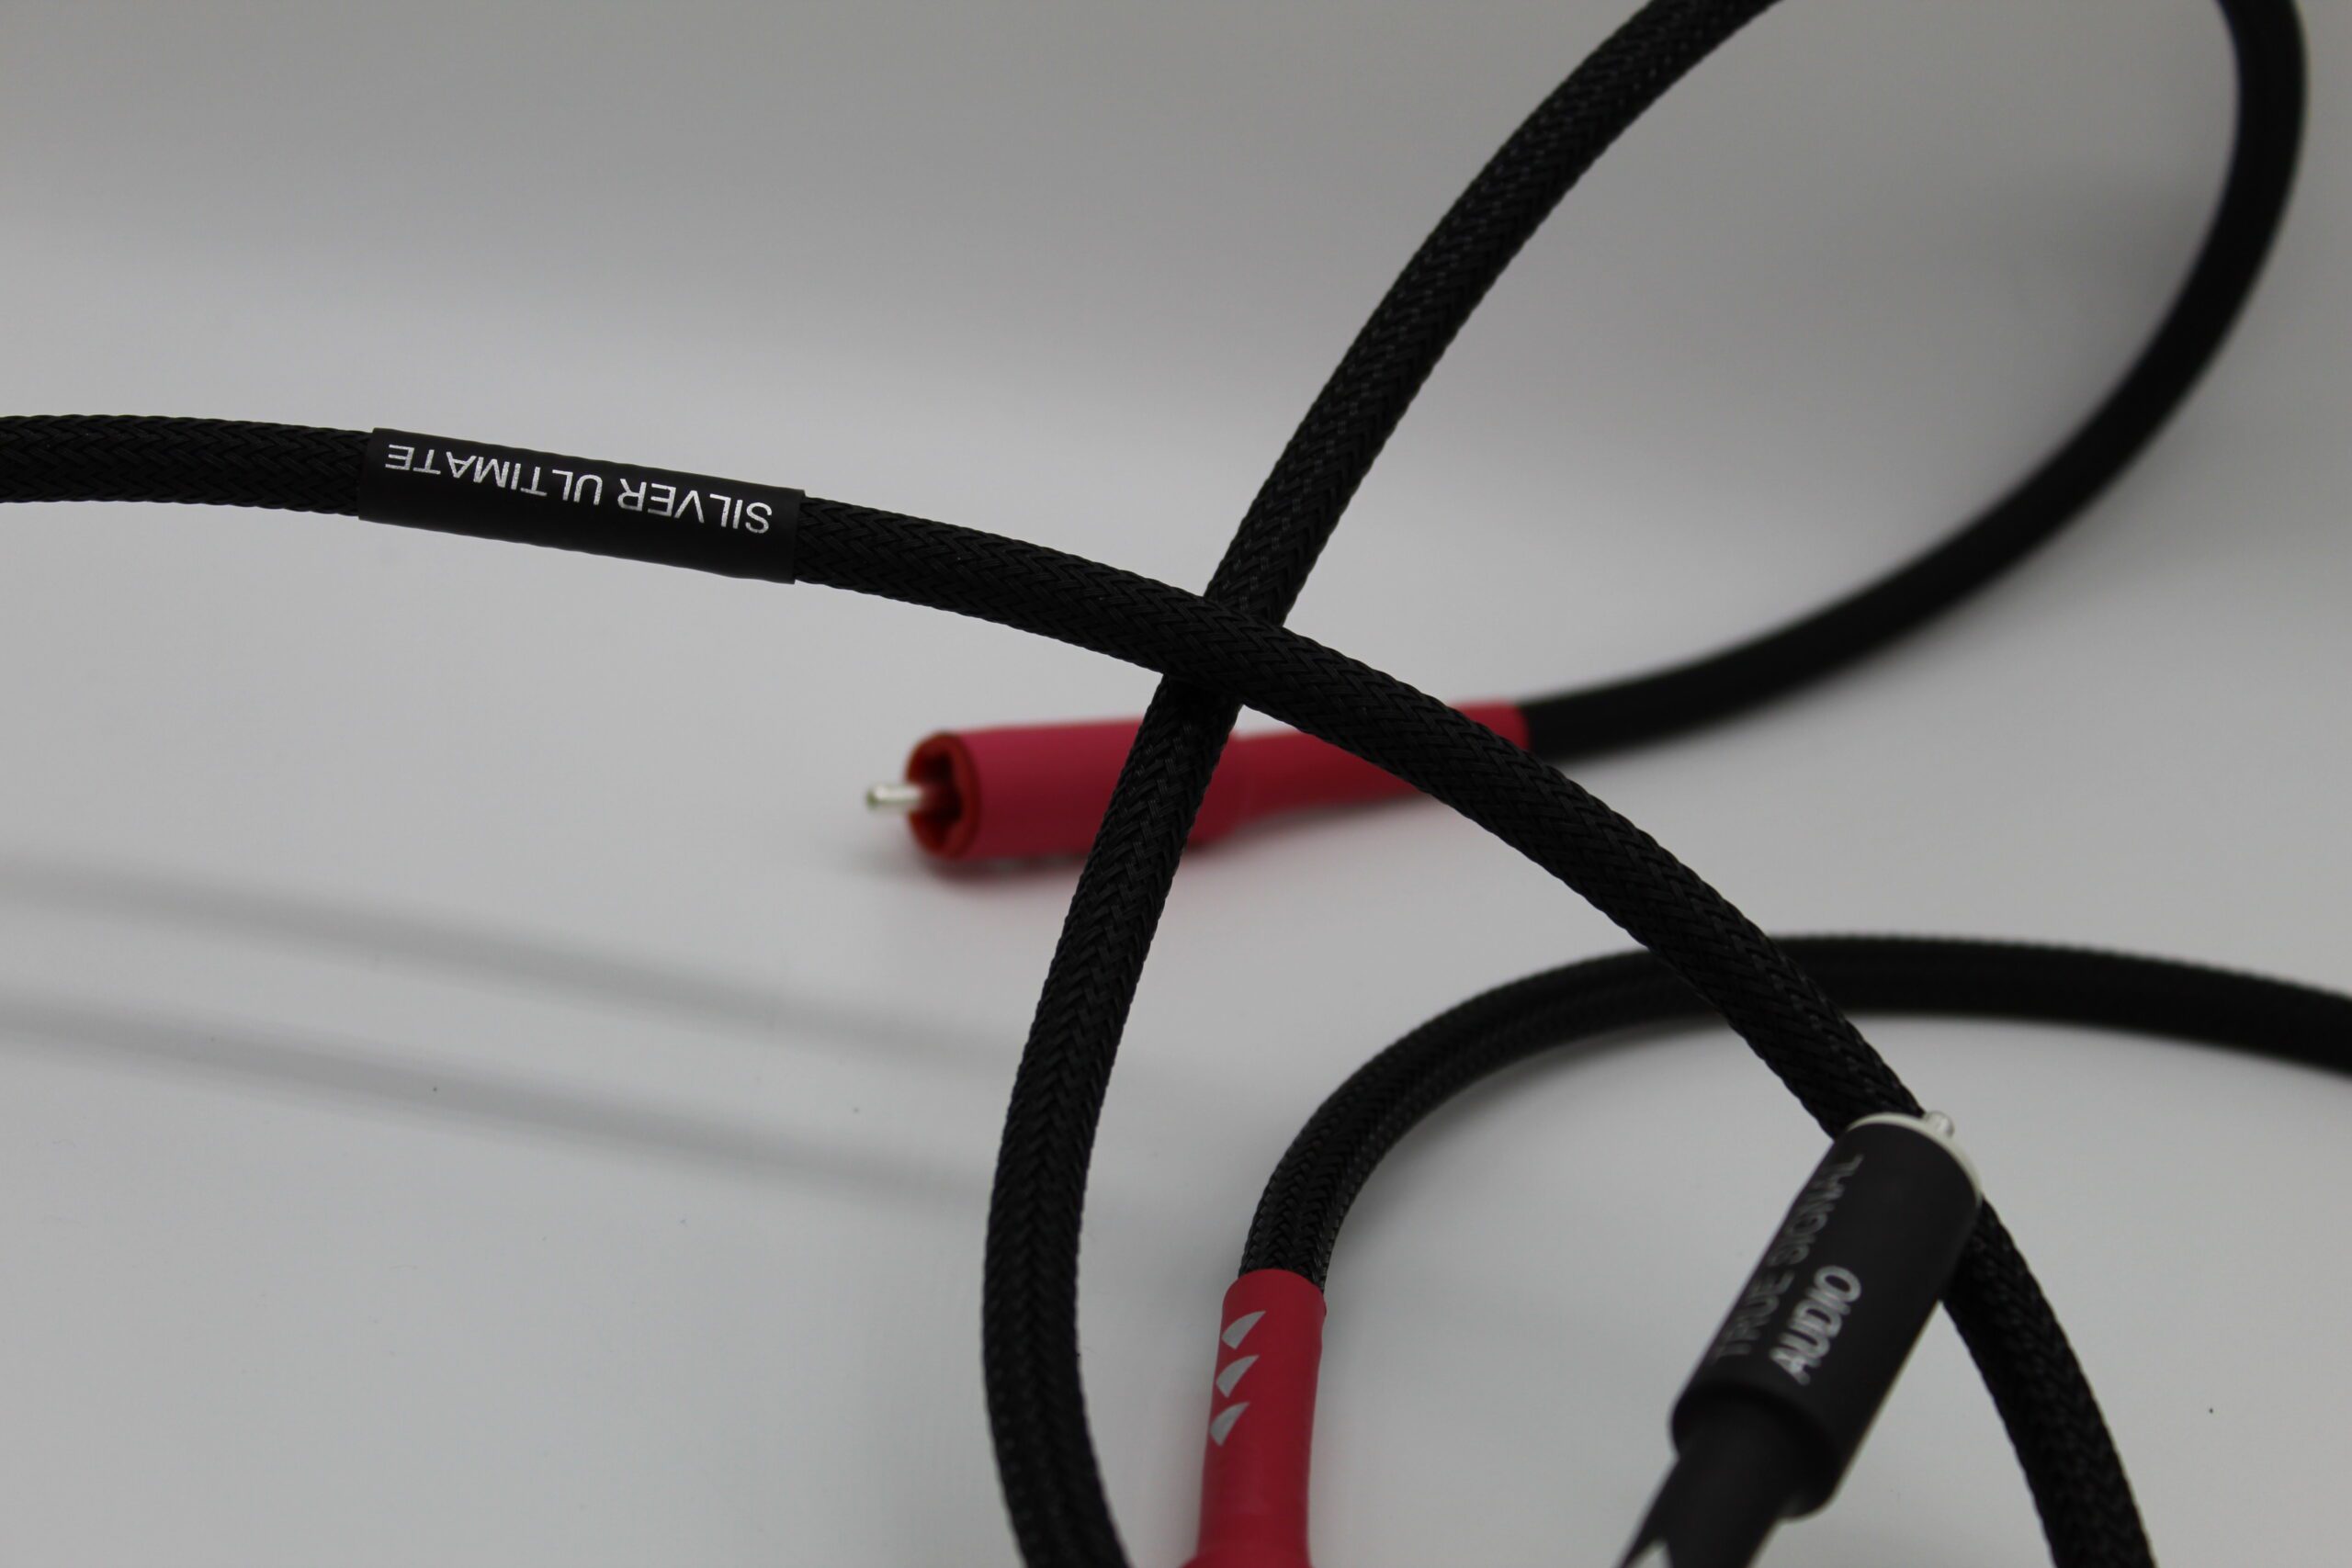 True Signal Audio cables